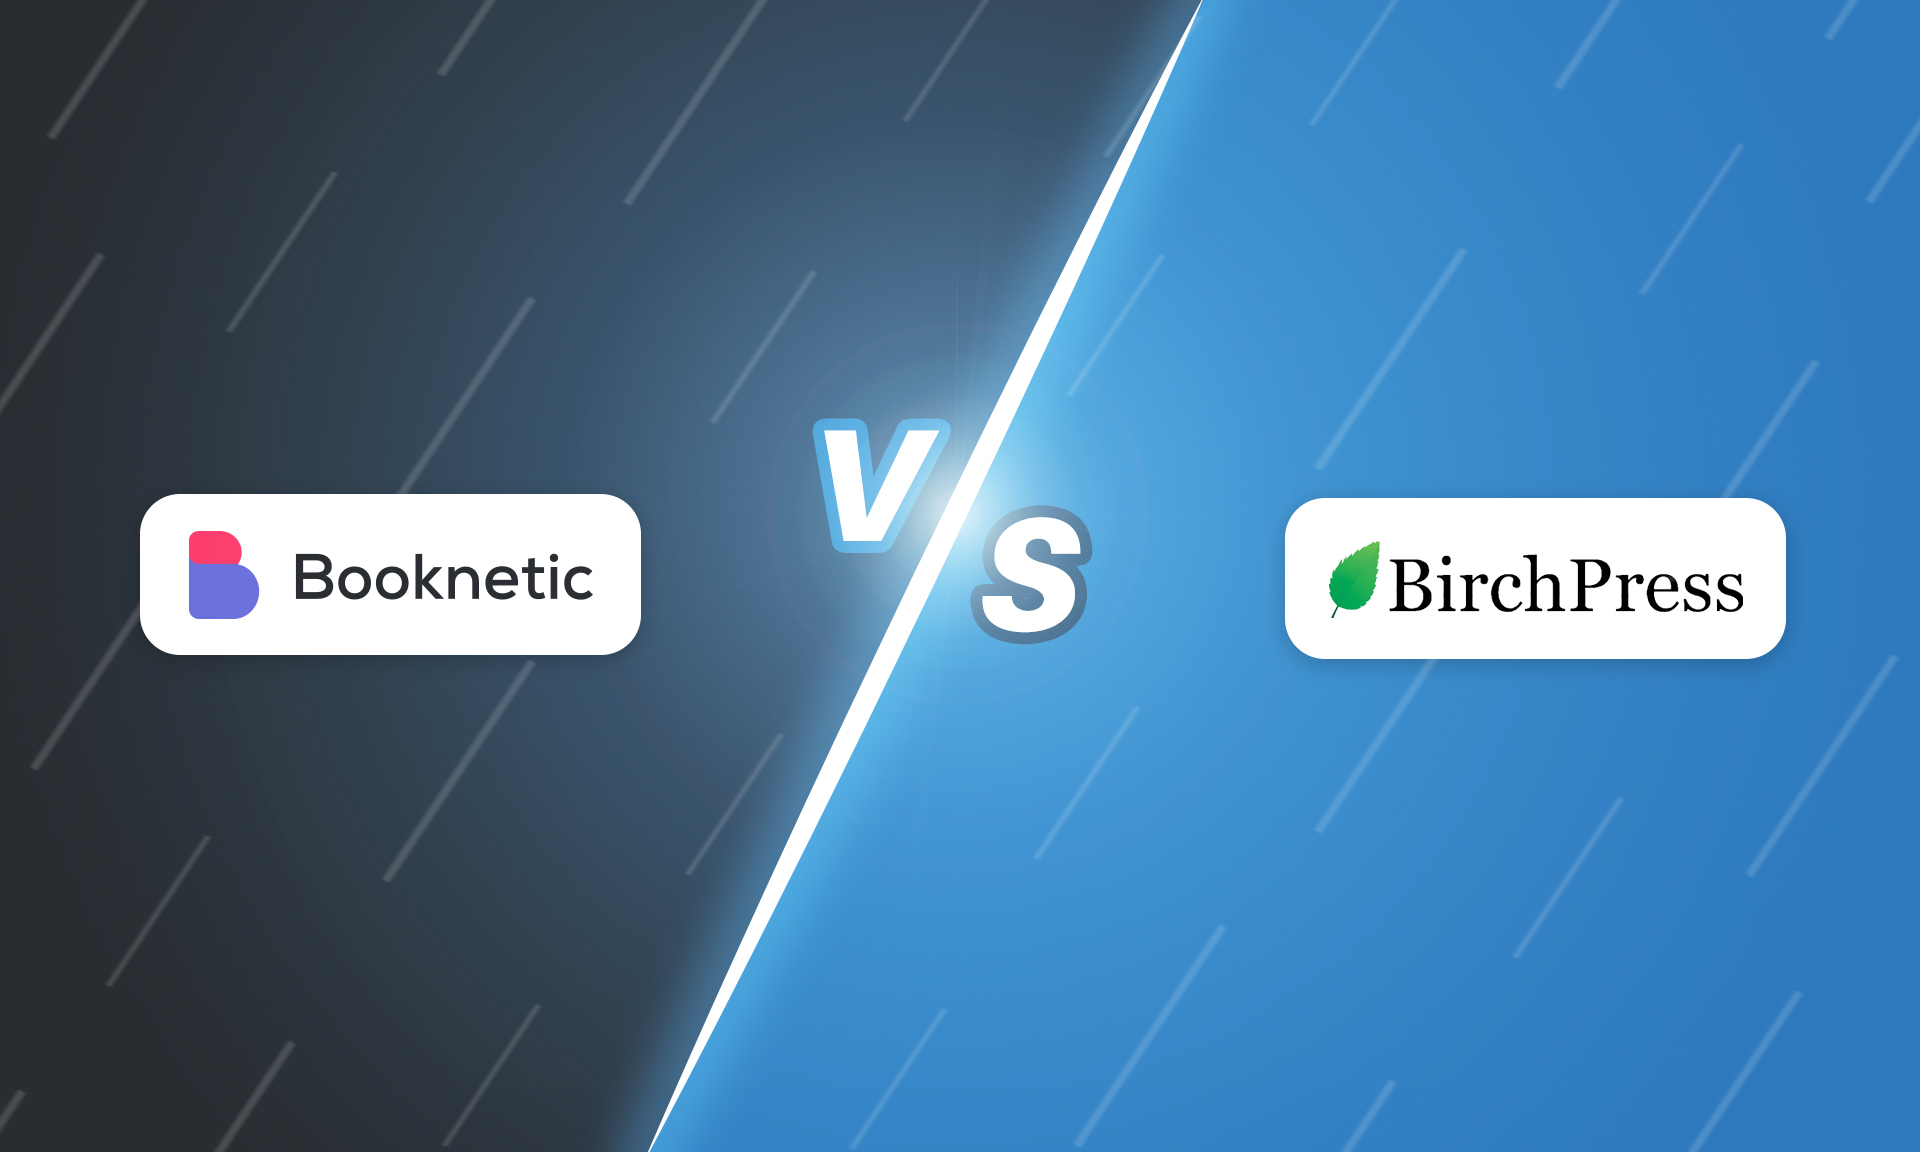 BirchPress vs Booknetic